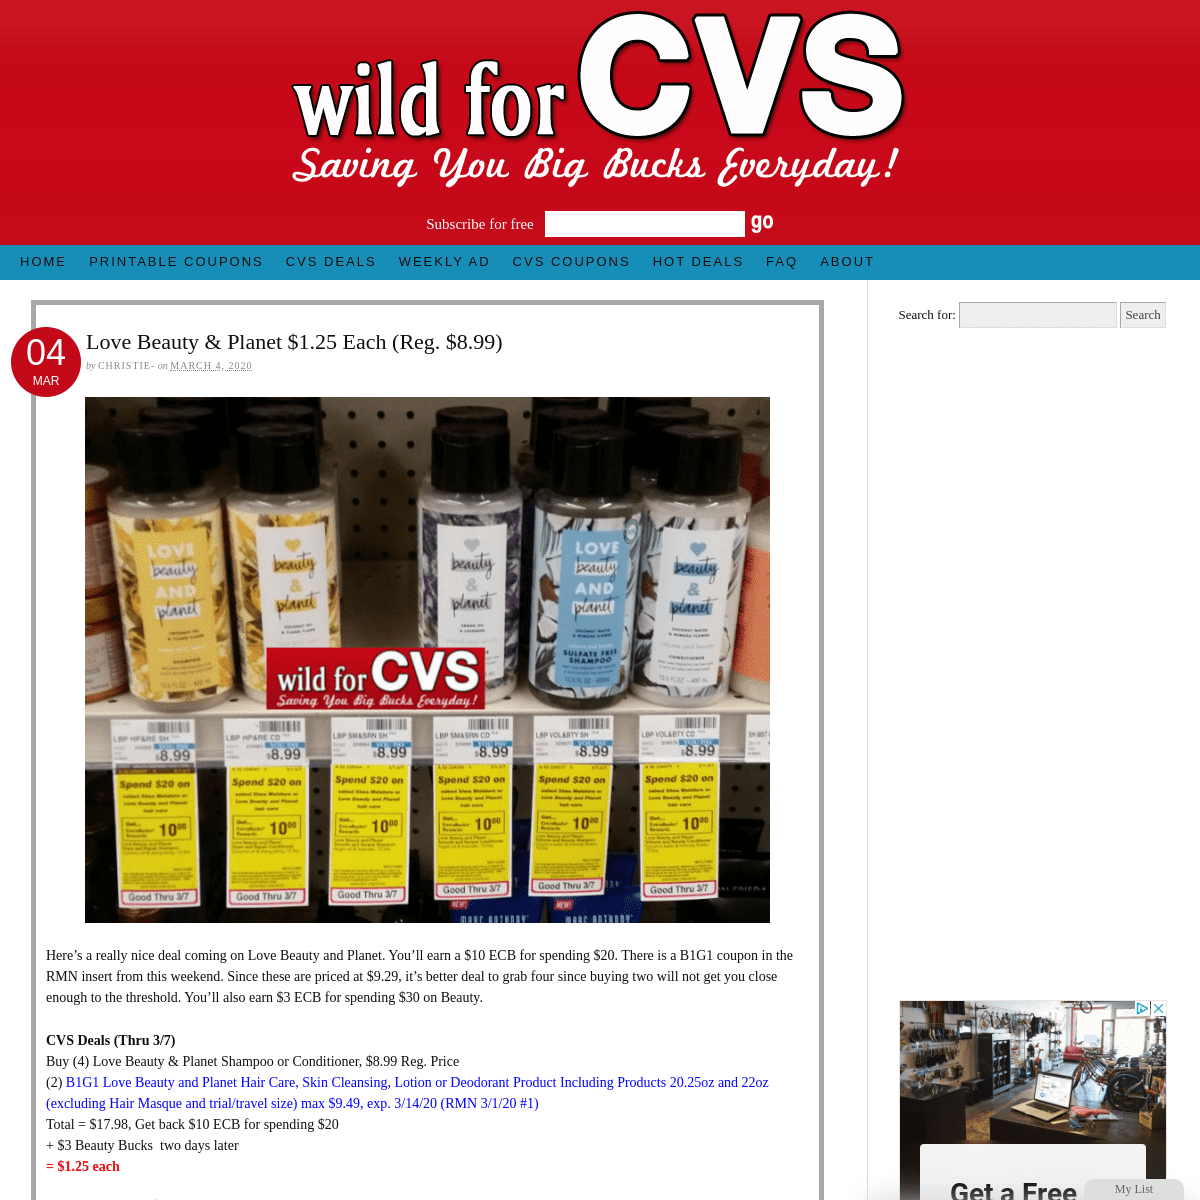 A complete backup of wildforcvs.com